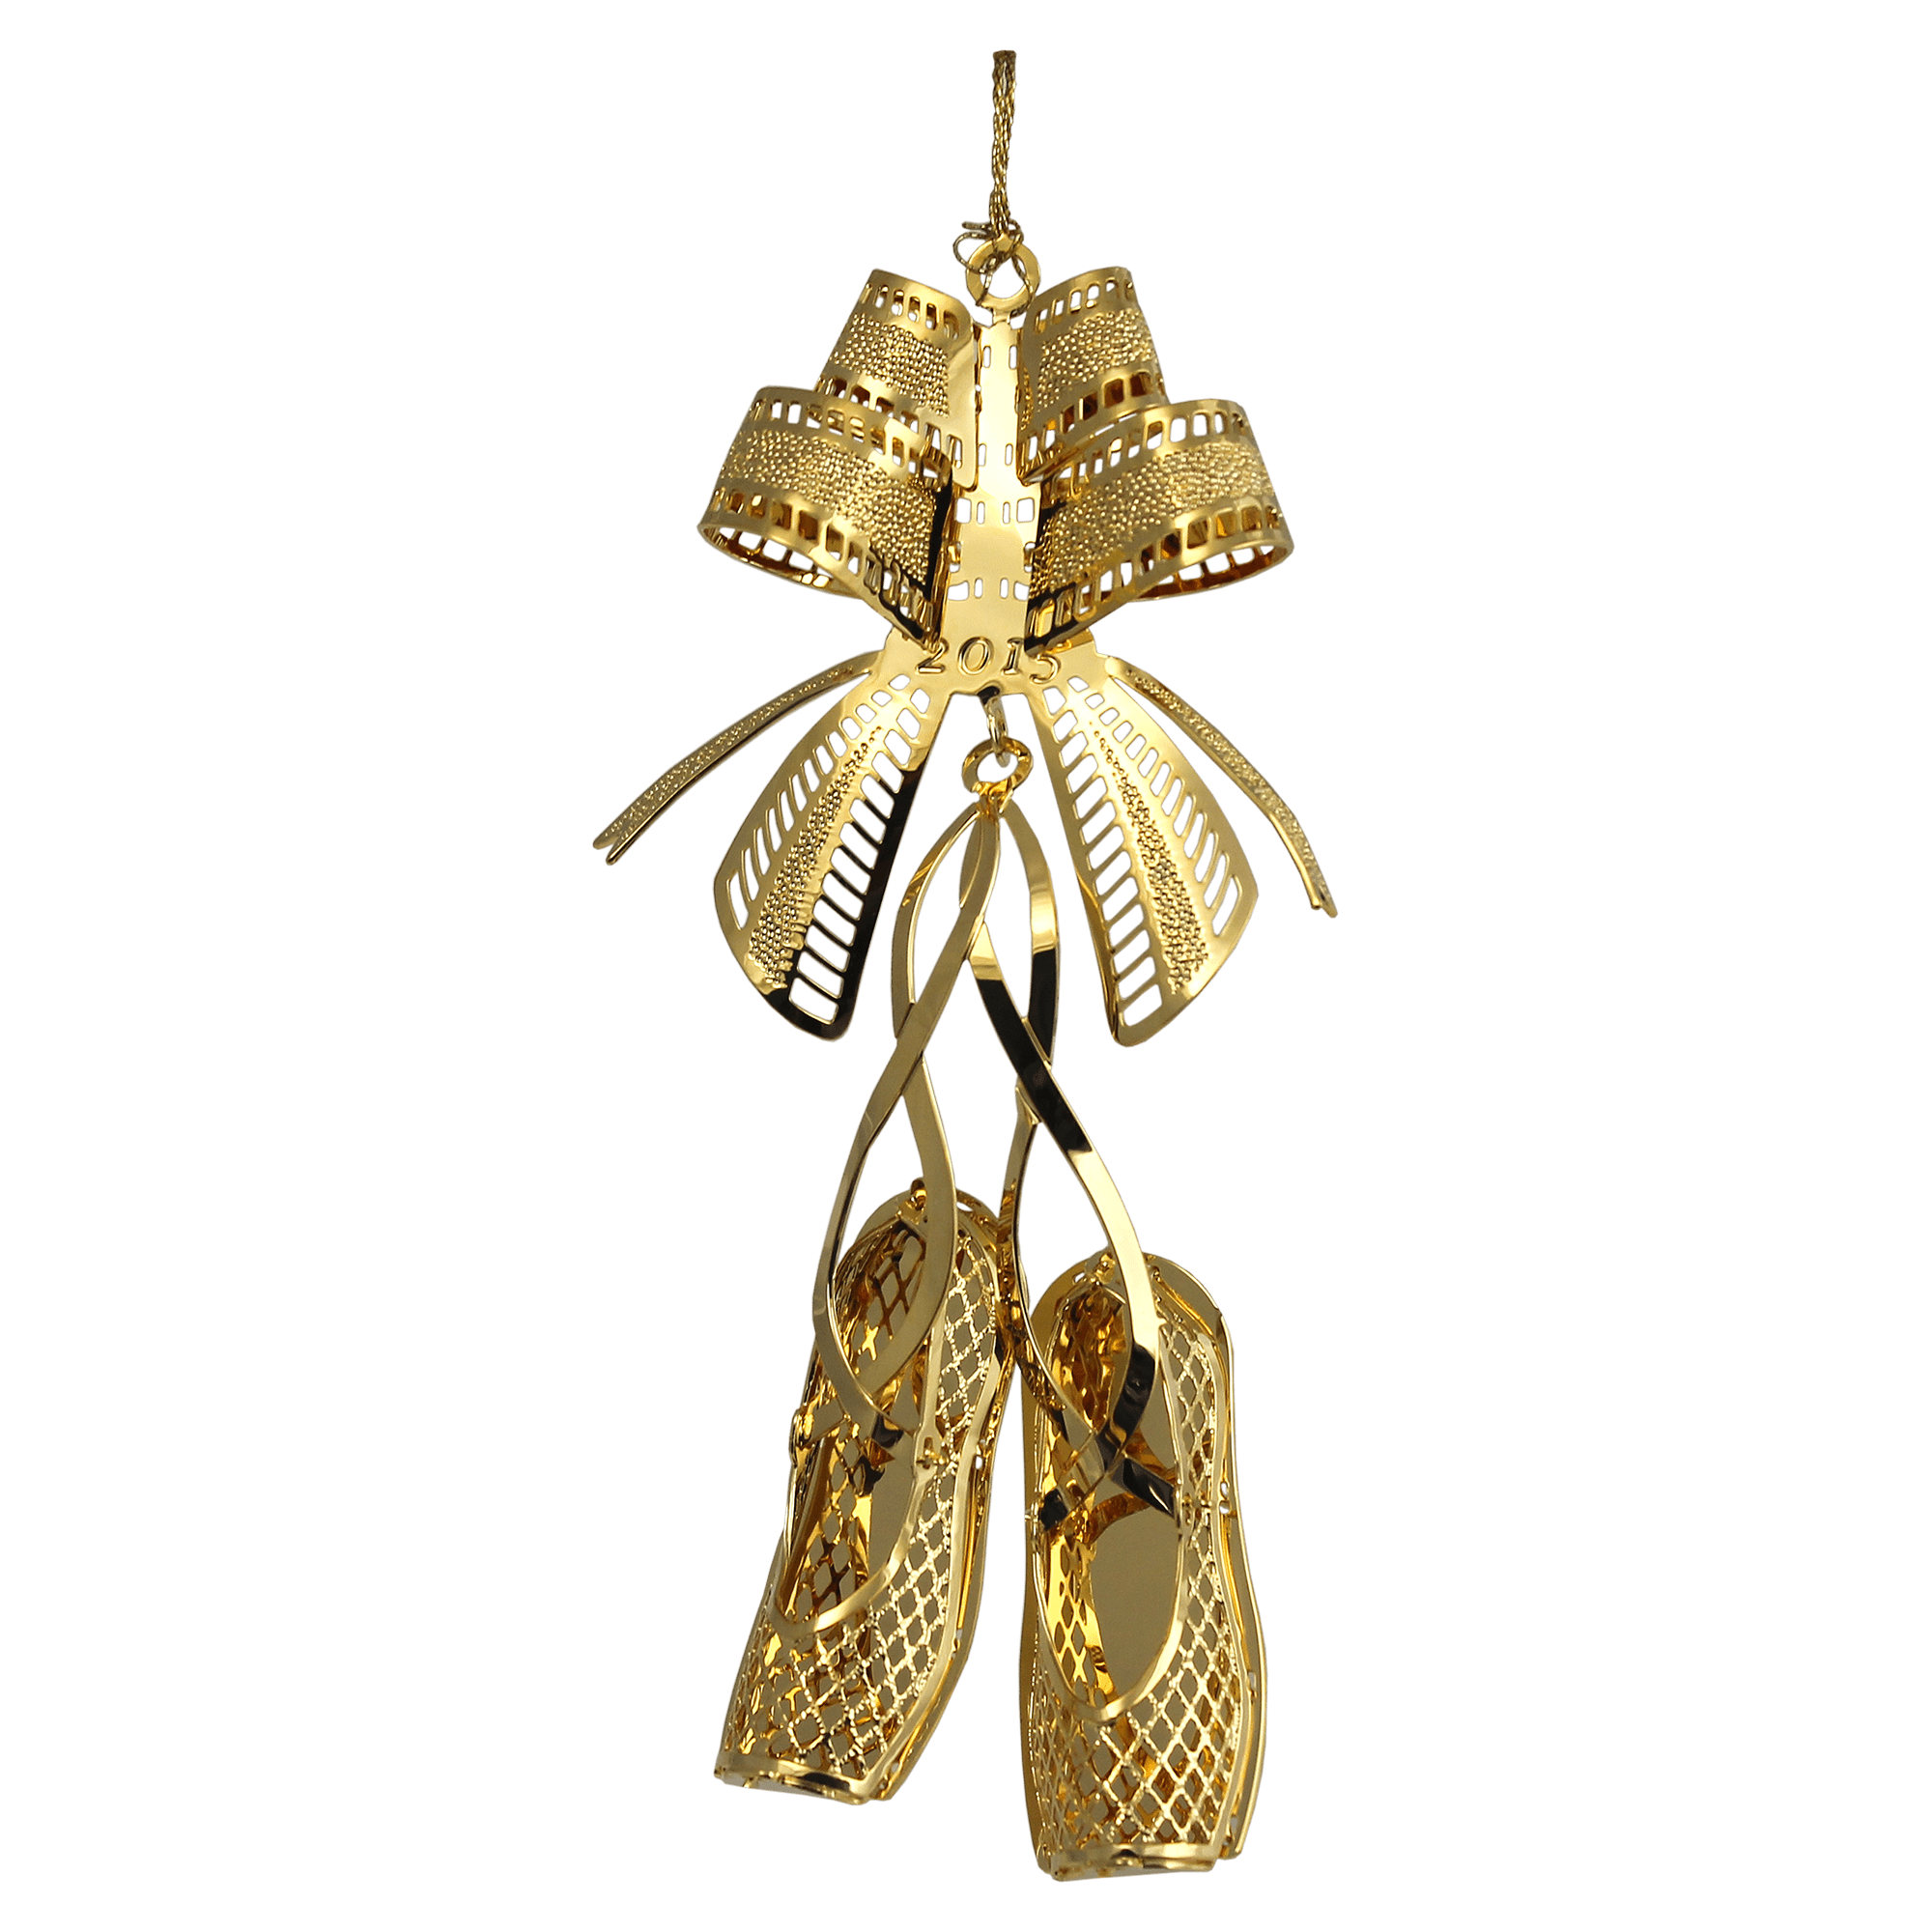 3D Gold Plated Brass Ornament (Ballet Slippers)